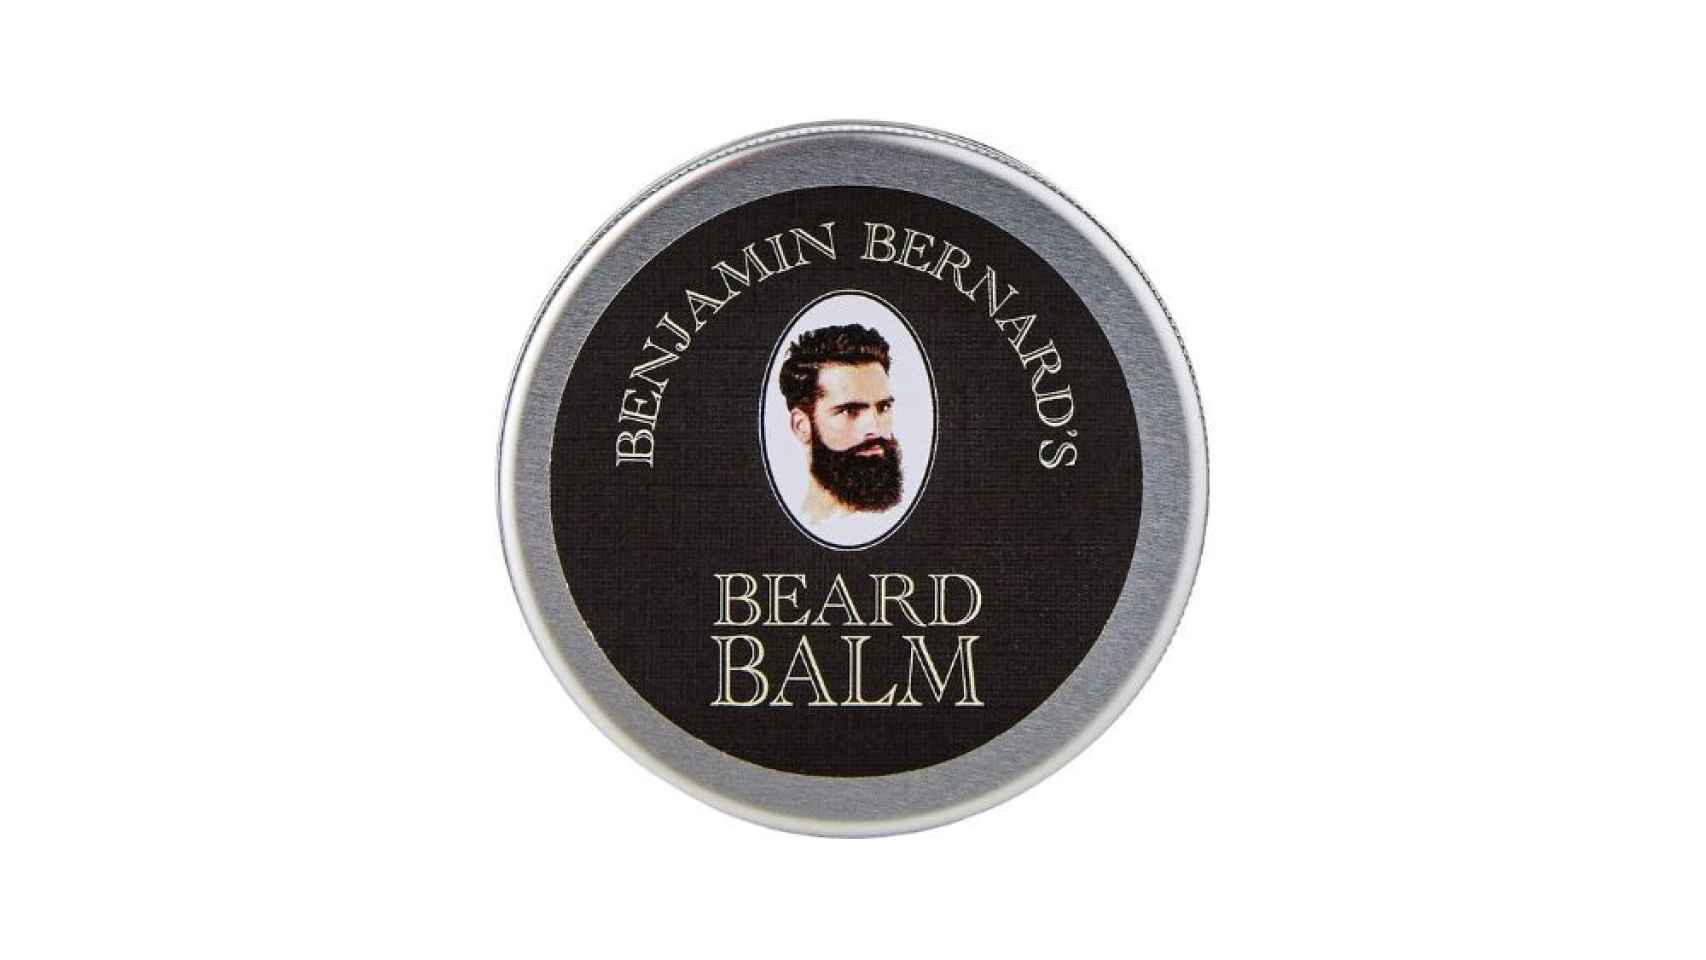 Cera para barba de Benjamin Bernard